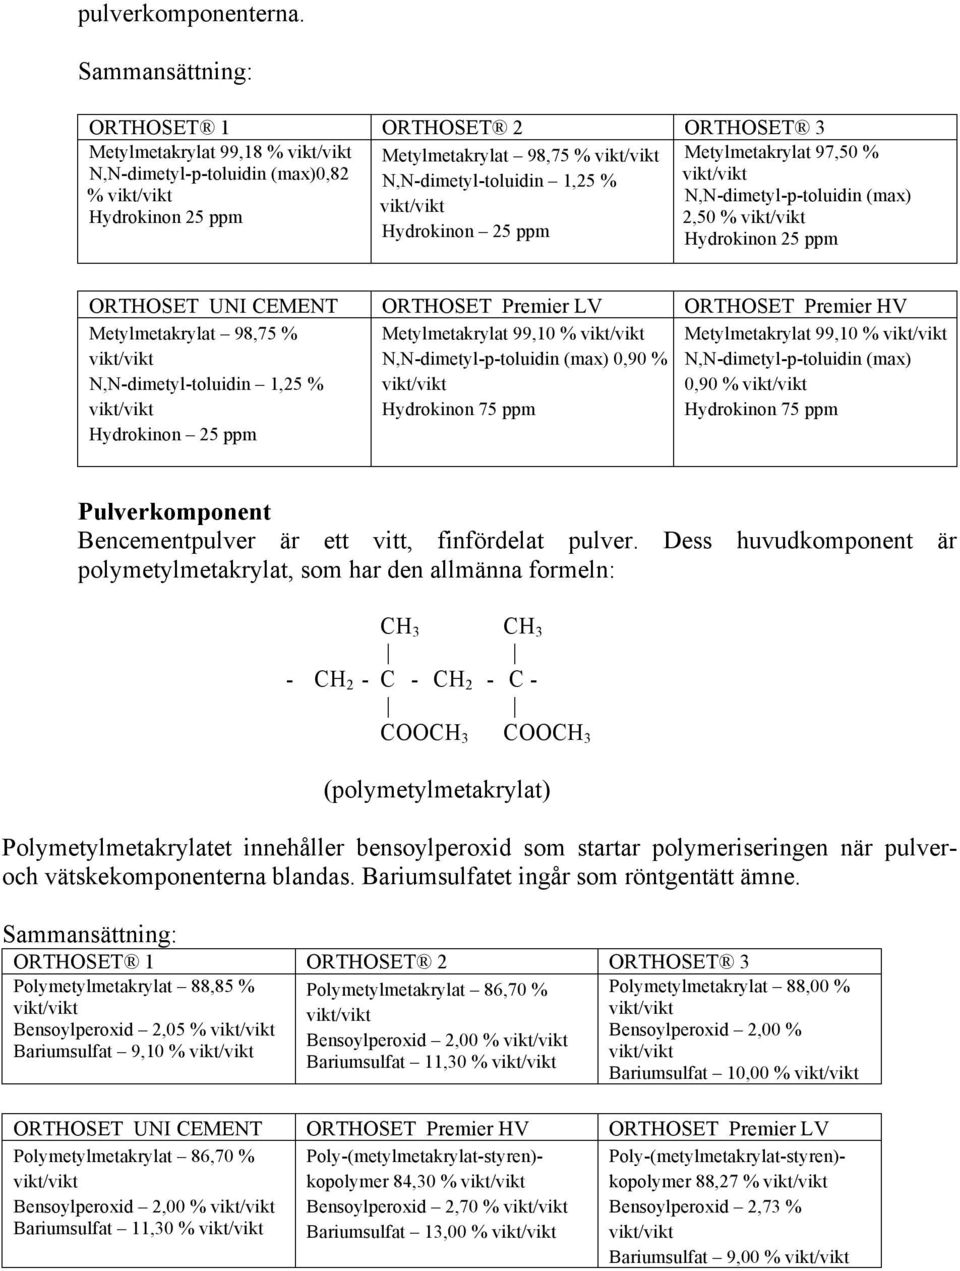 N,N-dimetyl-p-toluidin (max) Hydrokinon 25 ppm 2,50 % Hydrokinon 25 ppm Hydrokinon 25 ppm ORTHOSET UNI CEMENT ORTHOSET Premier LV ORTHOSET Premier HV Metylmetakrylat 98,75 % N,N-dimetyl-toluidin 1,25